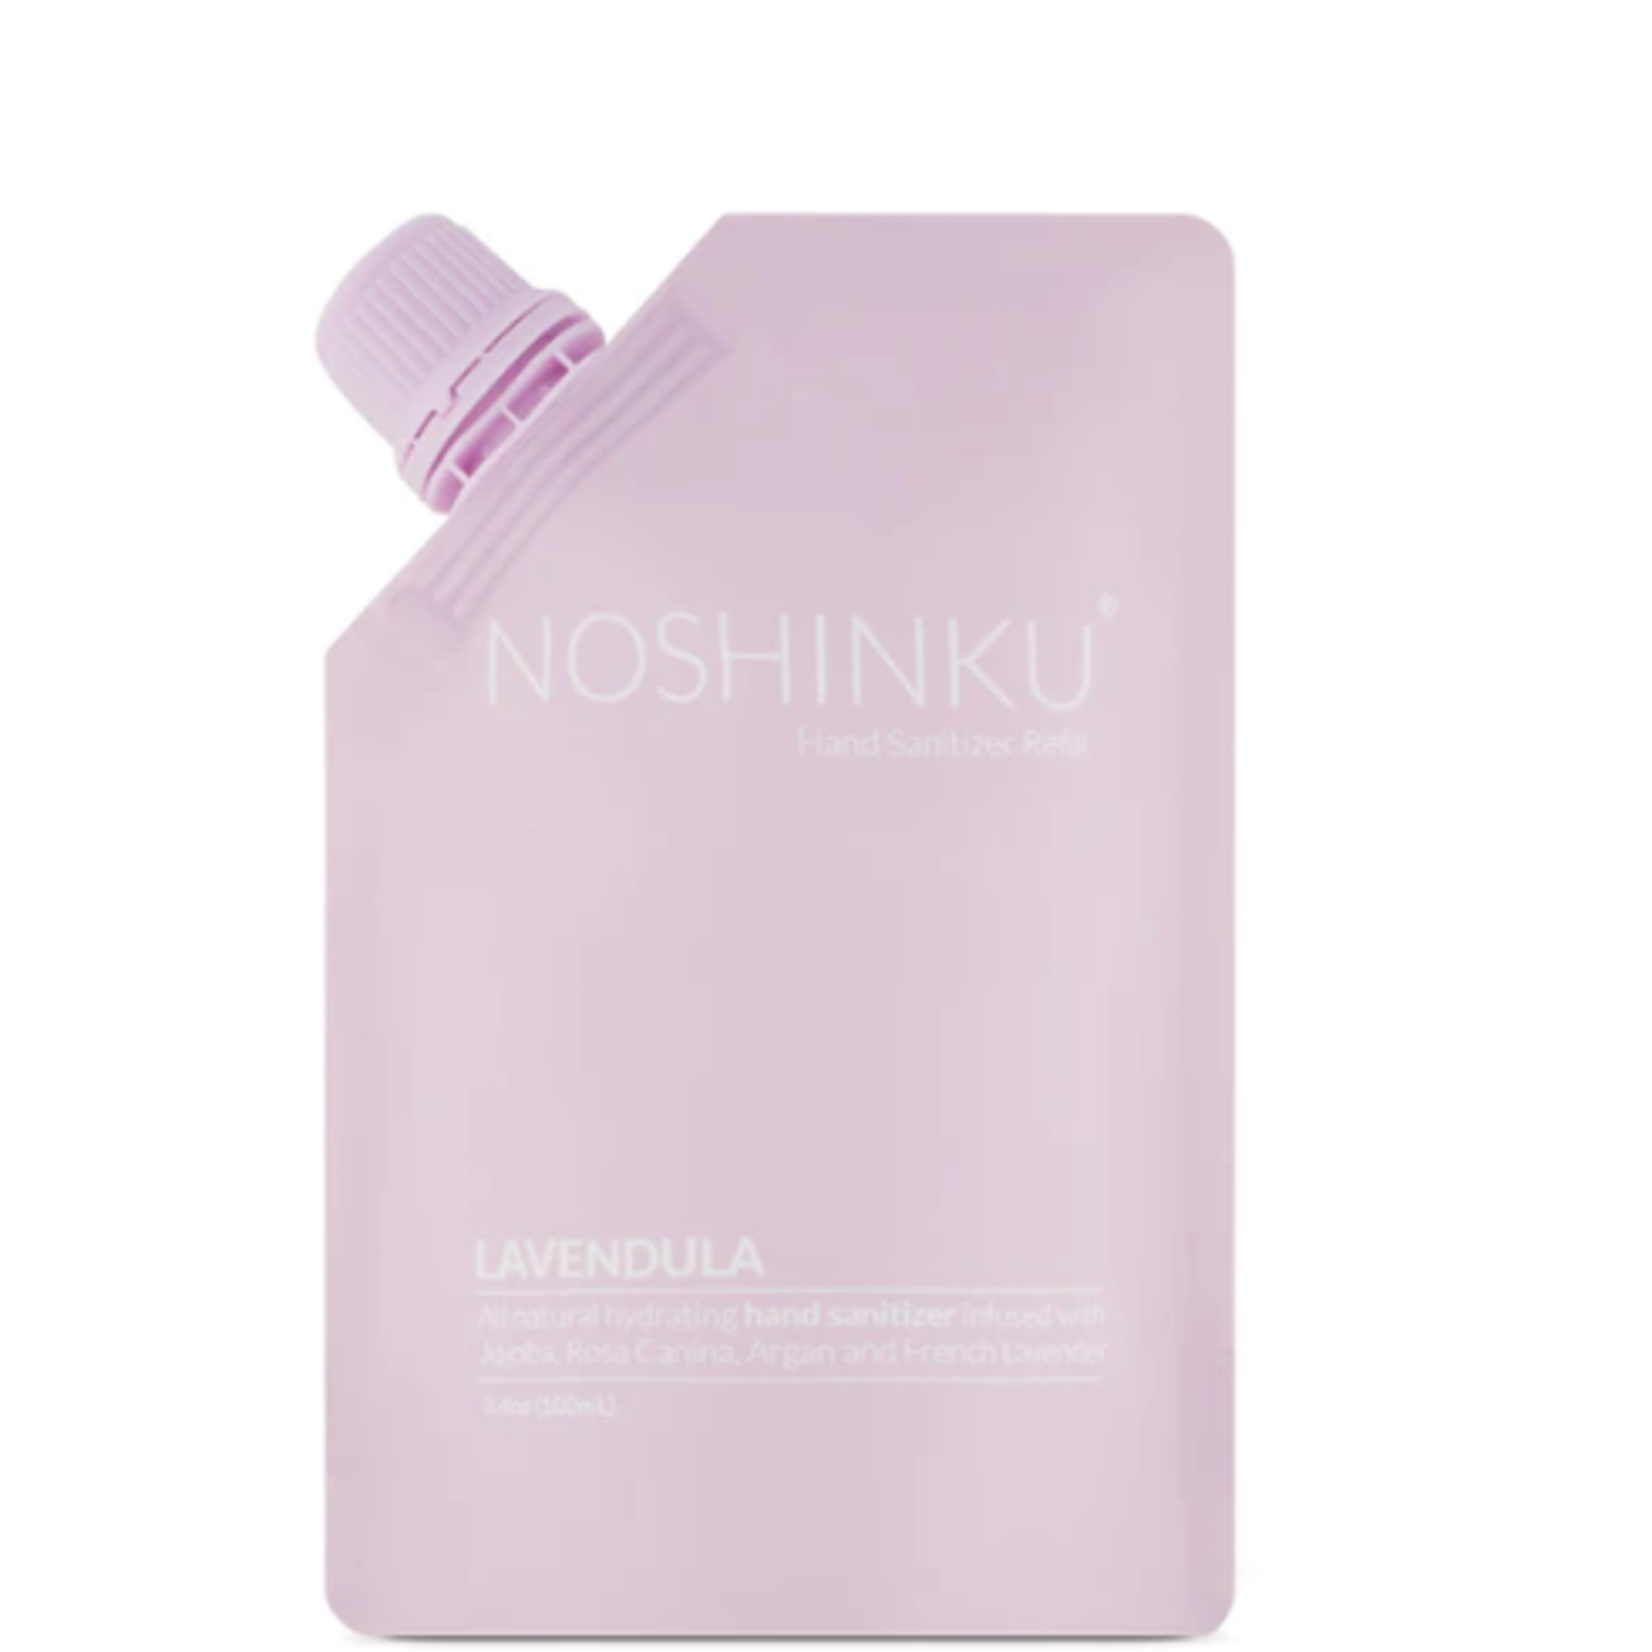 Noshinku Lavendula Nourishing Pocket Cleanser Refill